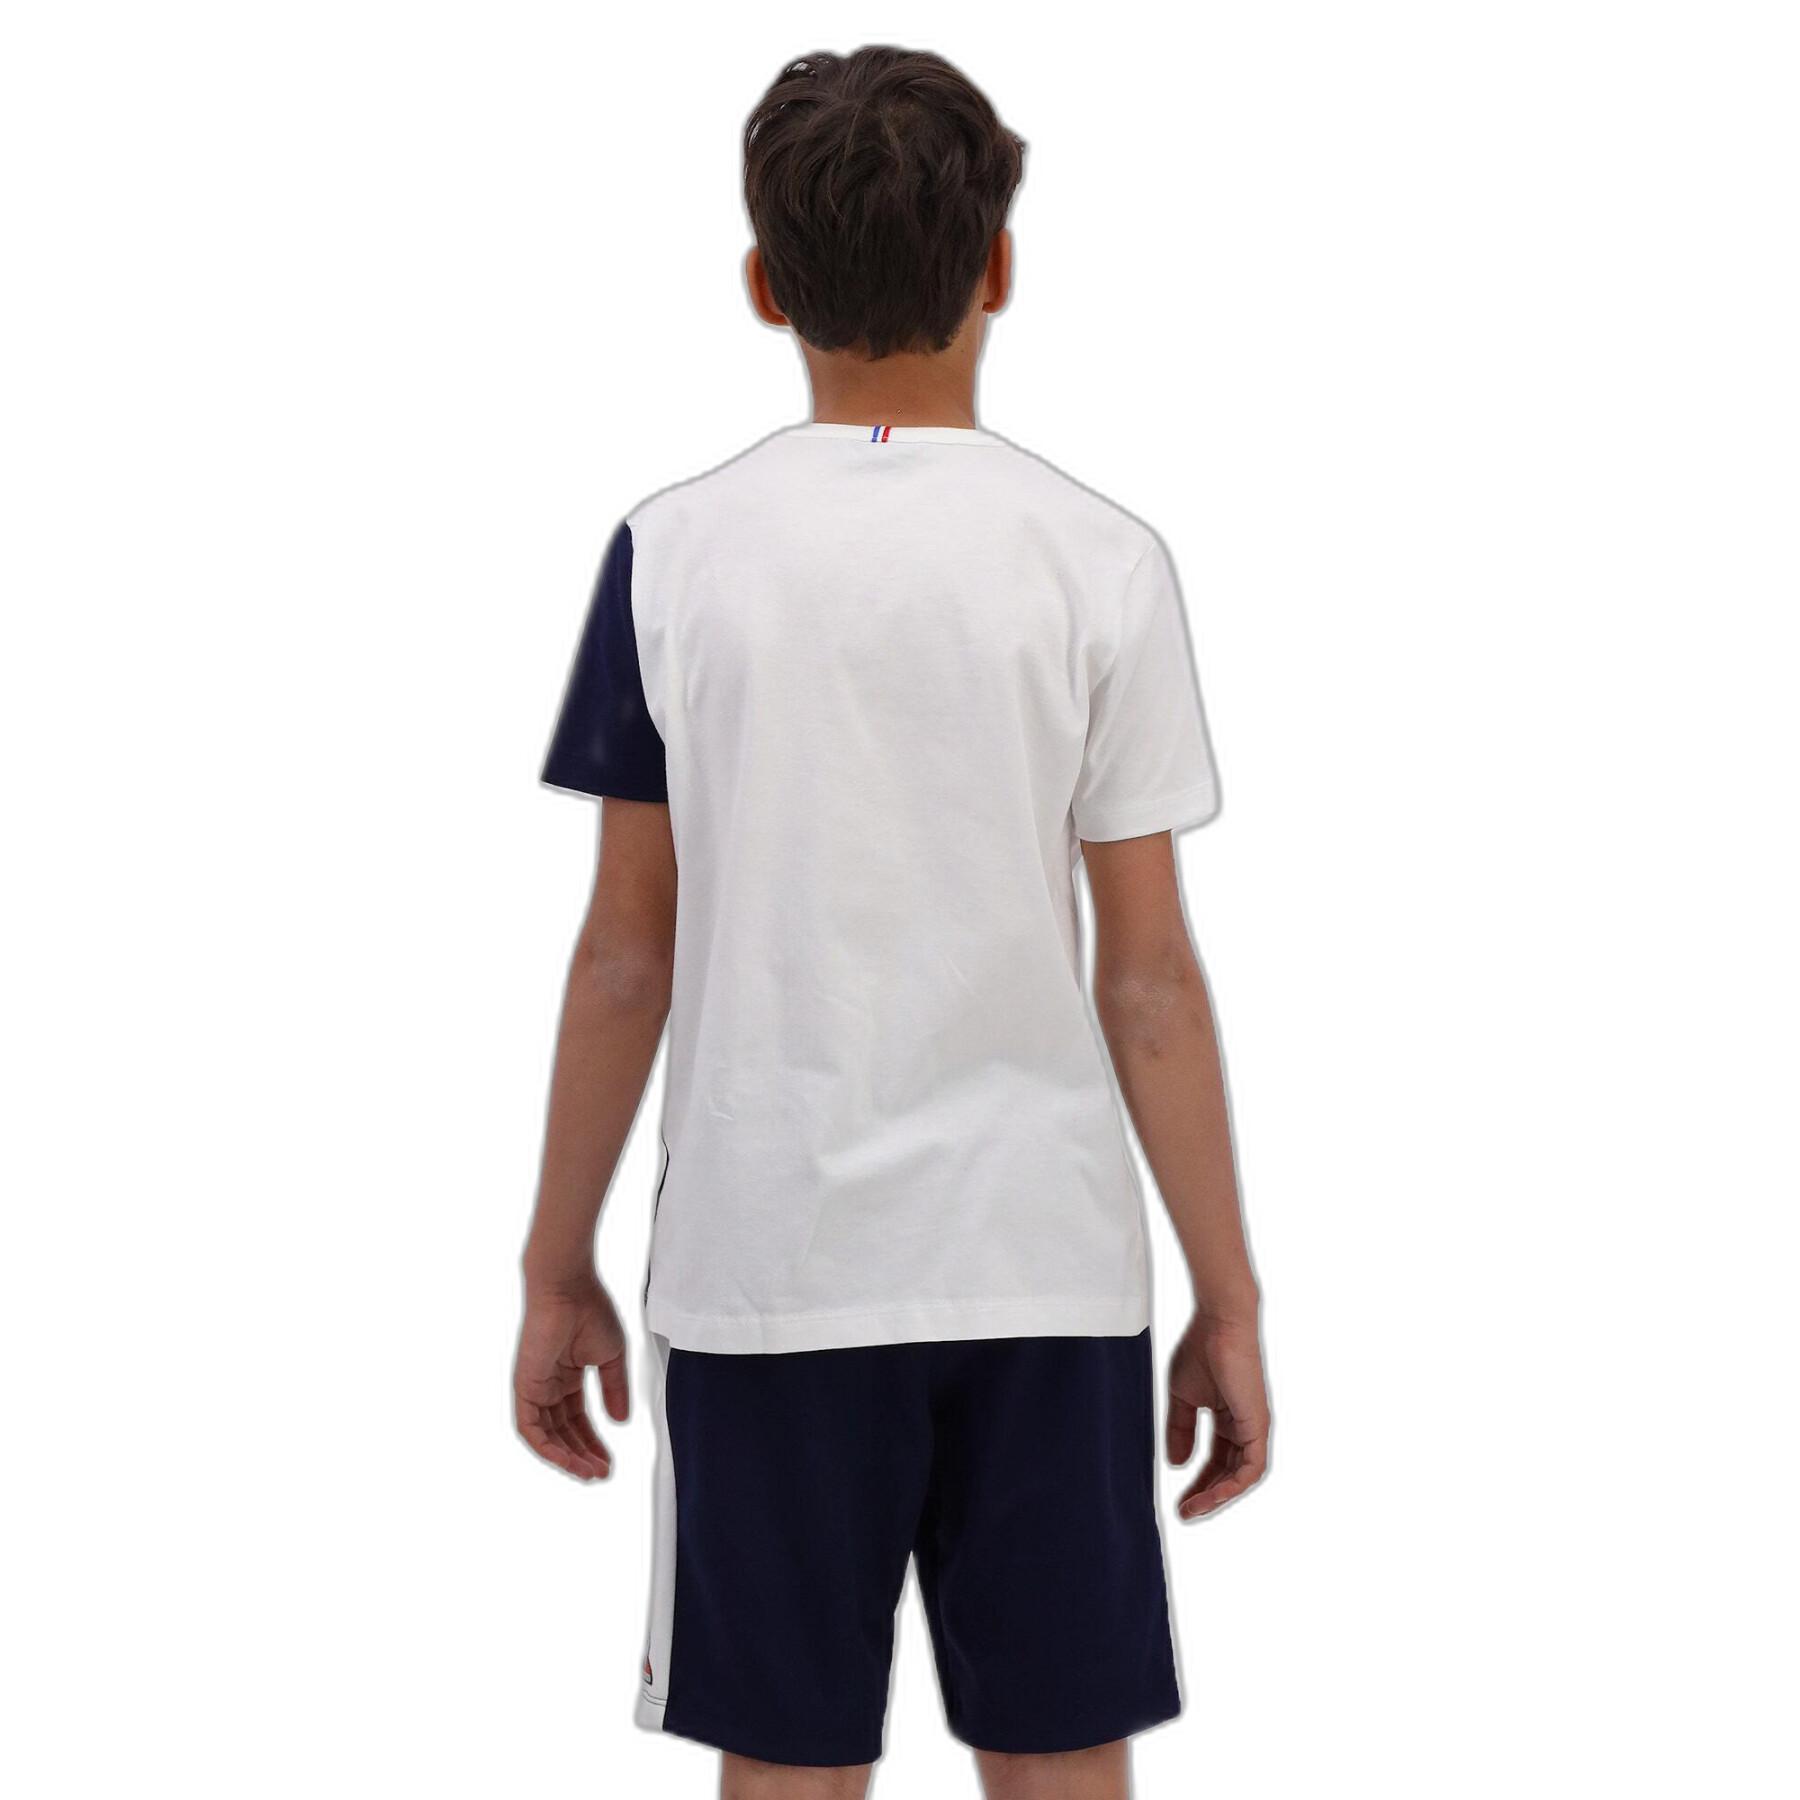 Short sleeve t-shirt Le Coq Sportif Saison N°1